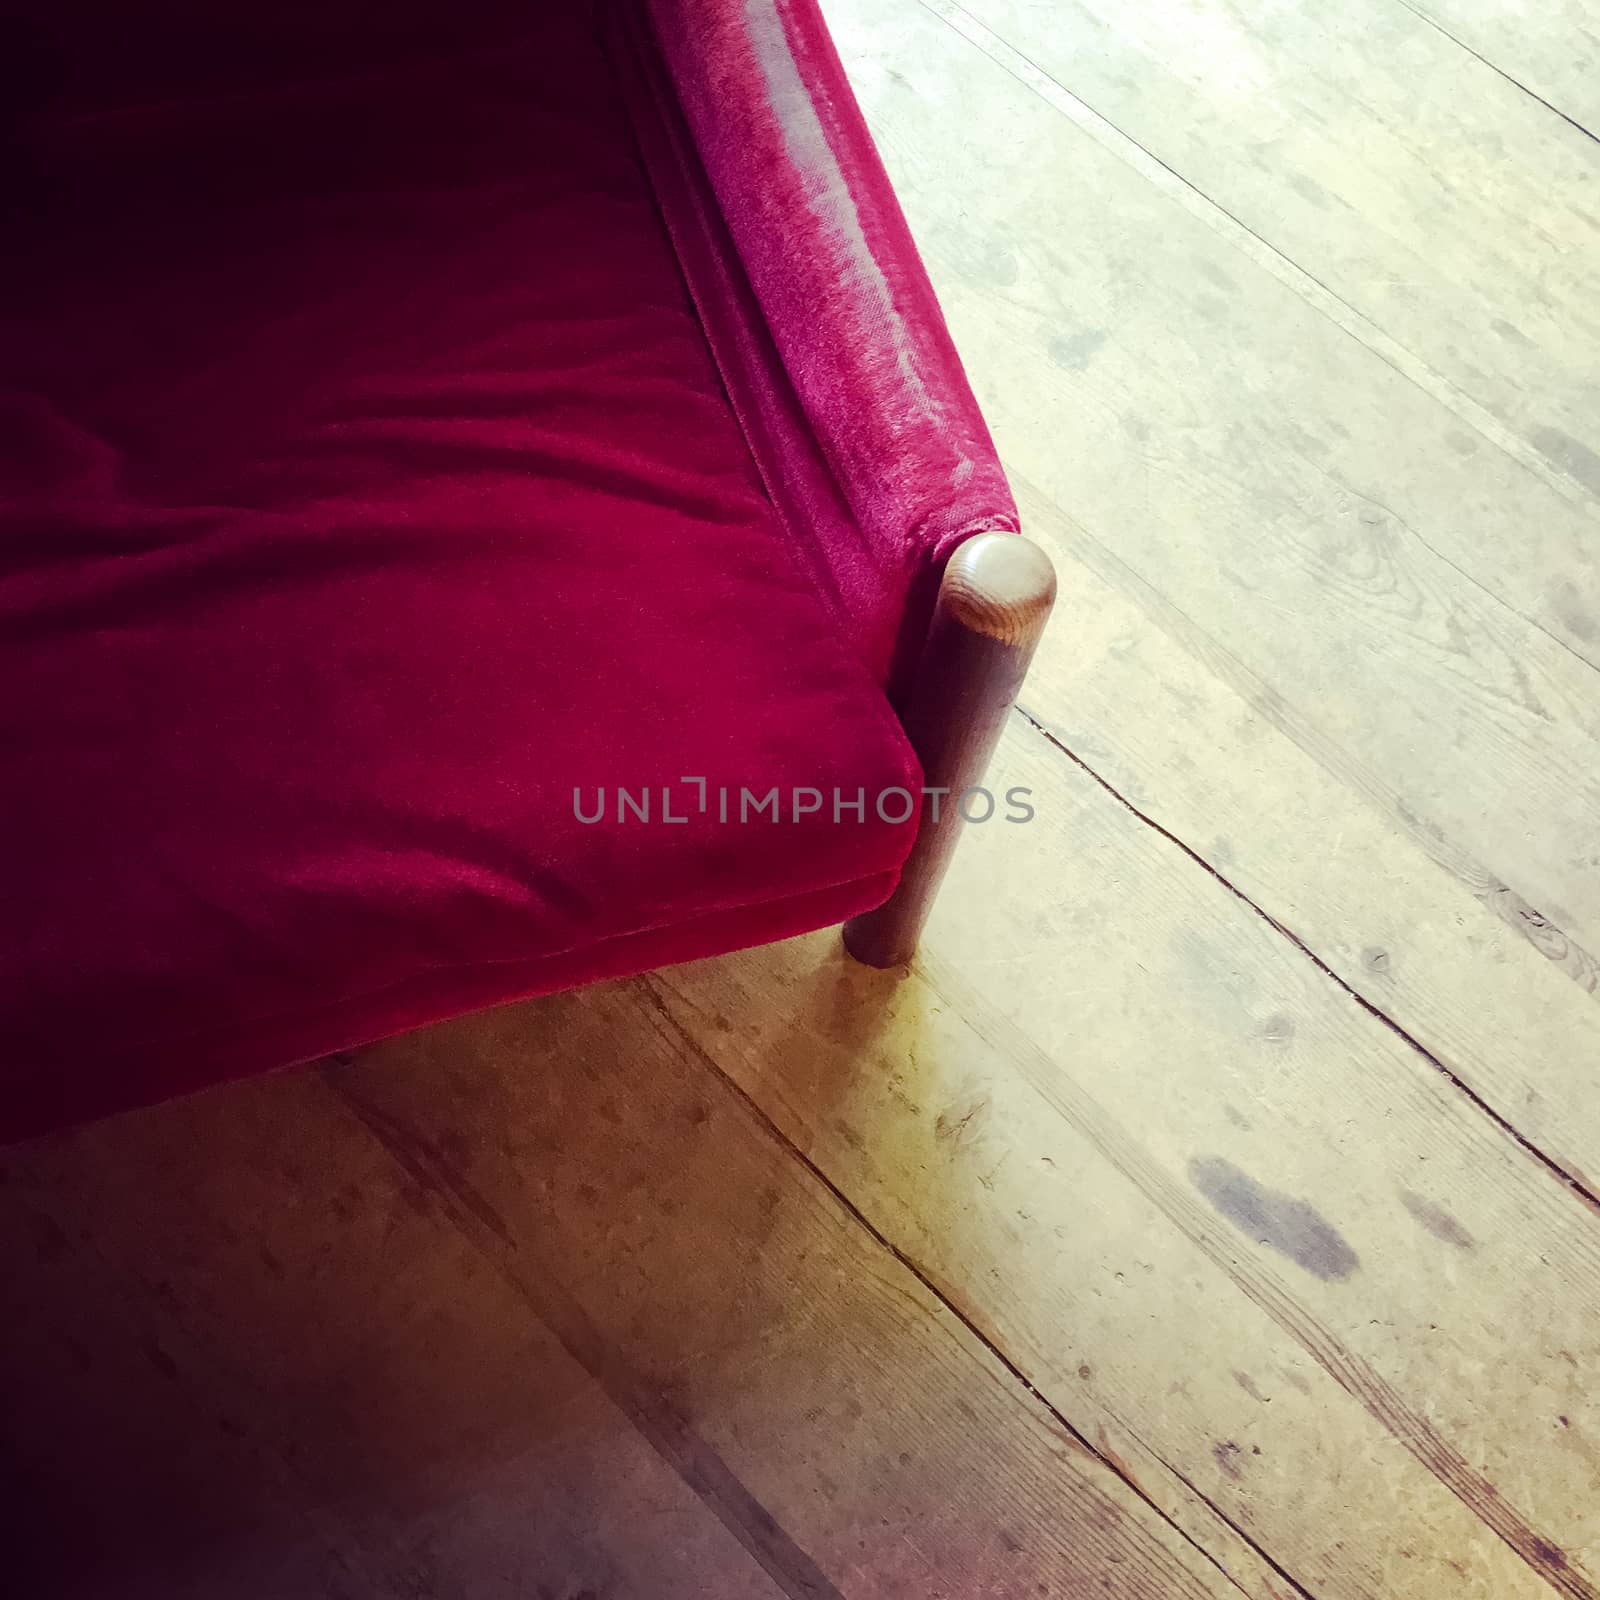 Vintage red velvet armchair on wooden floor by anikasalsera